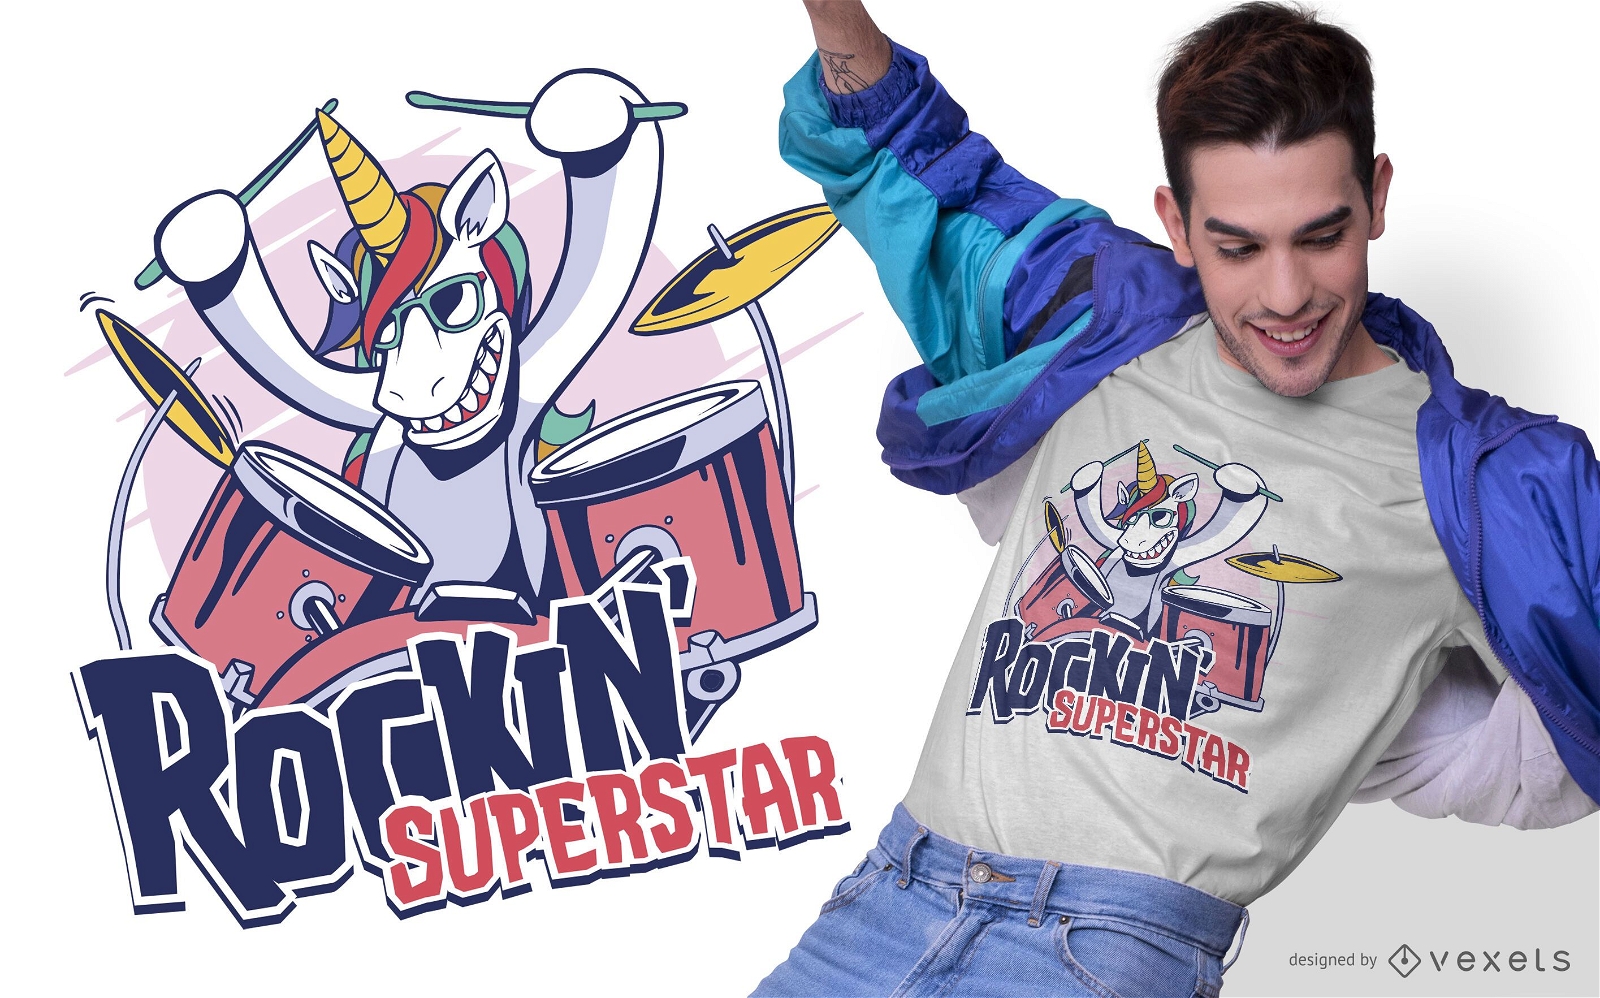 Unicorn superstar t-shirt design